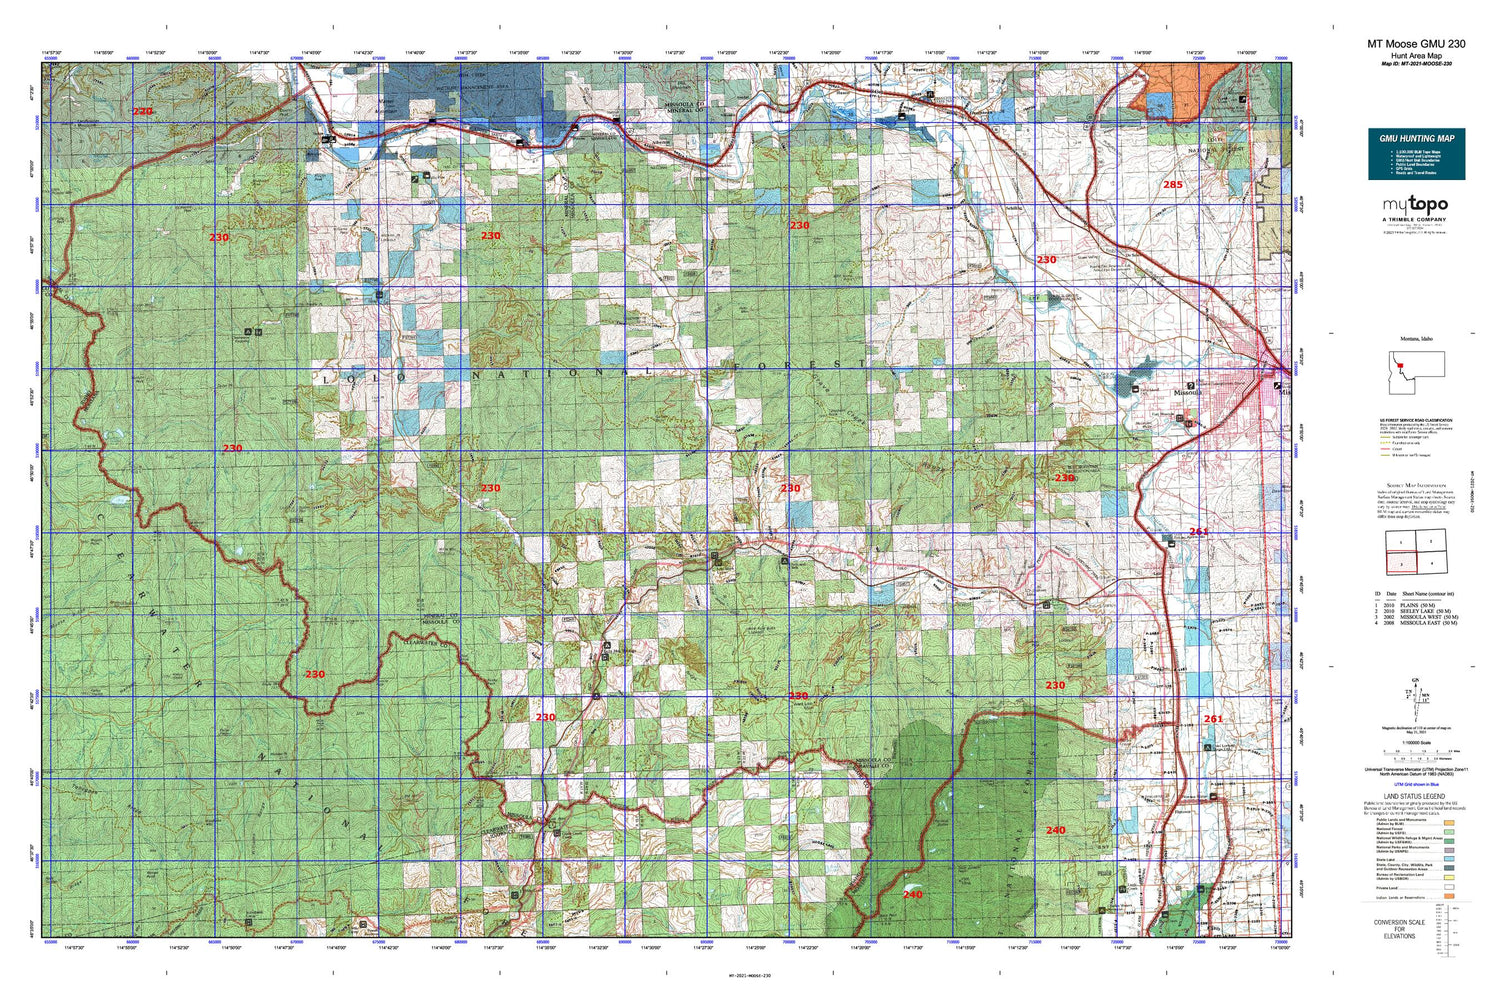 Montana Moose GMU 230 Map Image